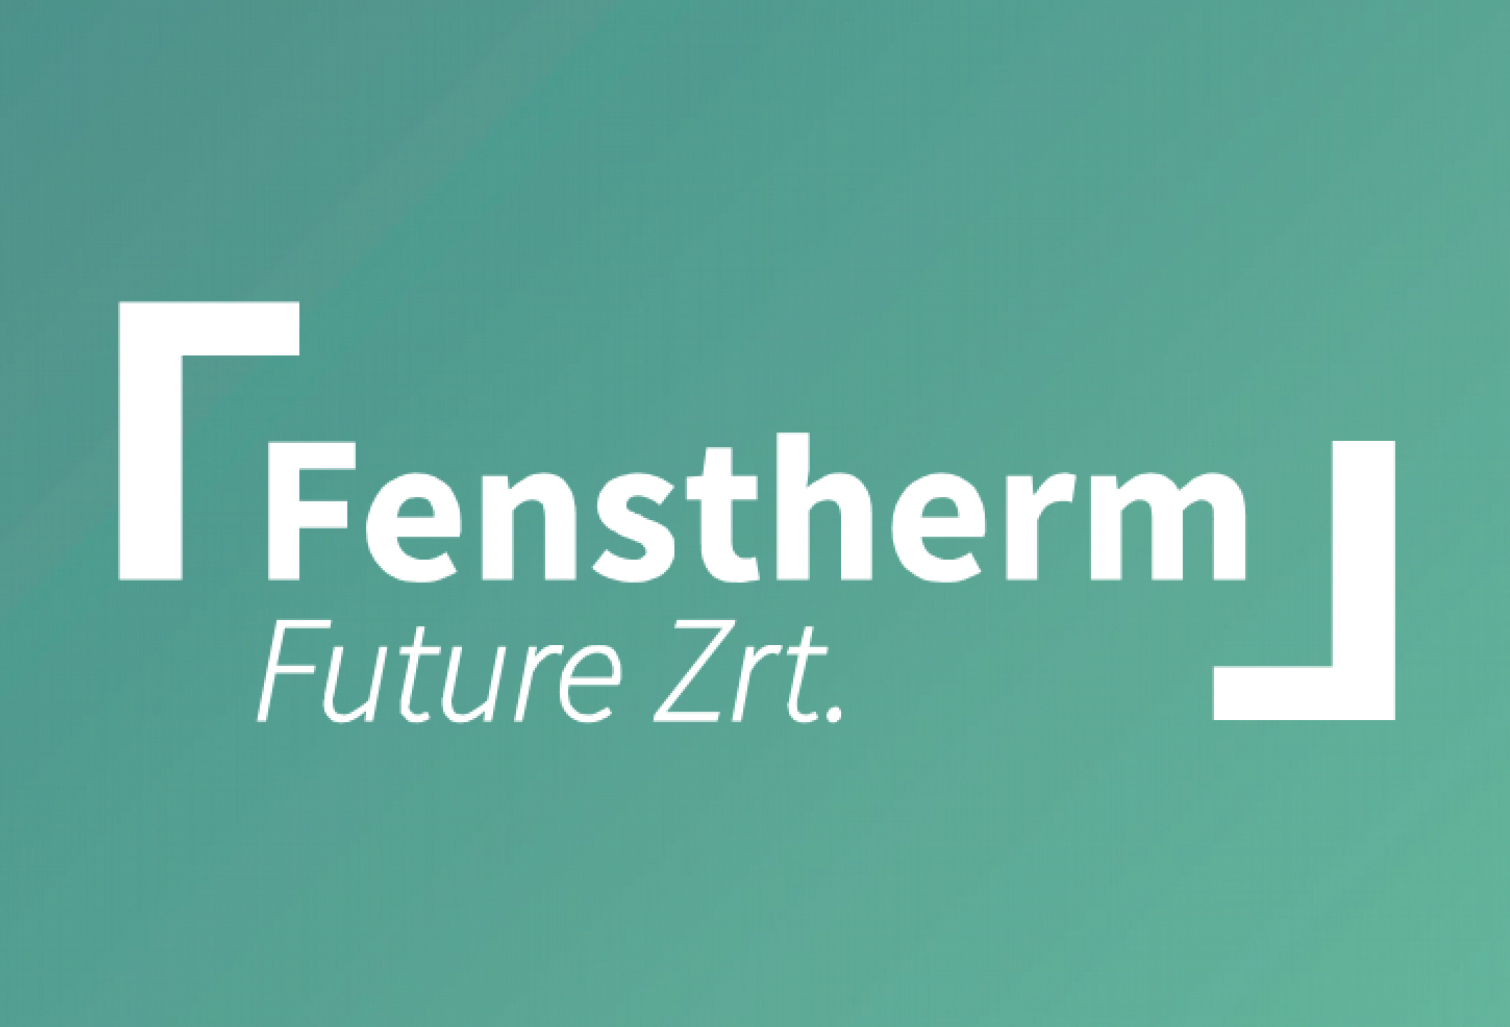 Fenstherm Future Zrt.